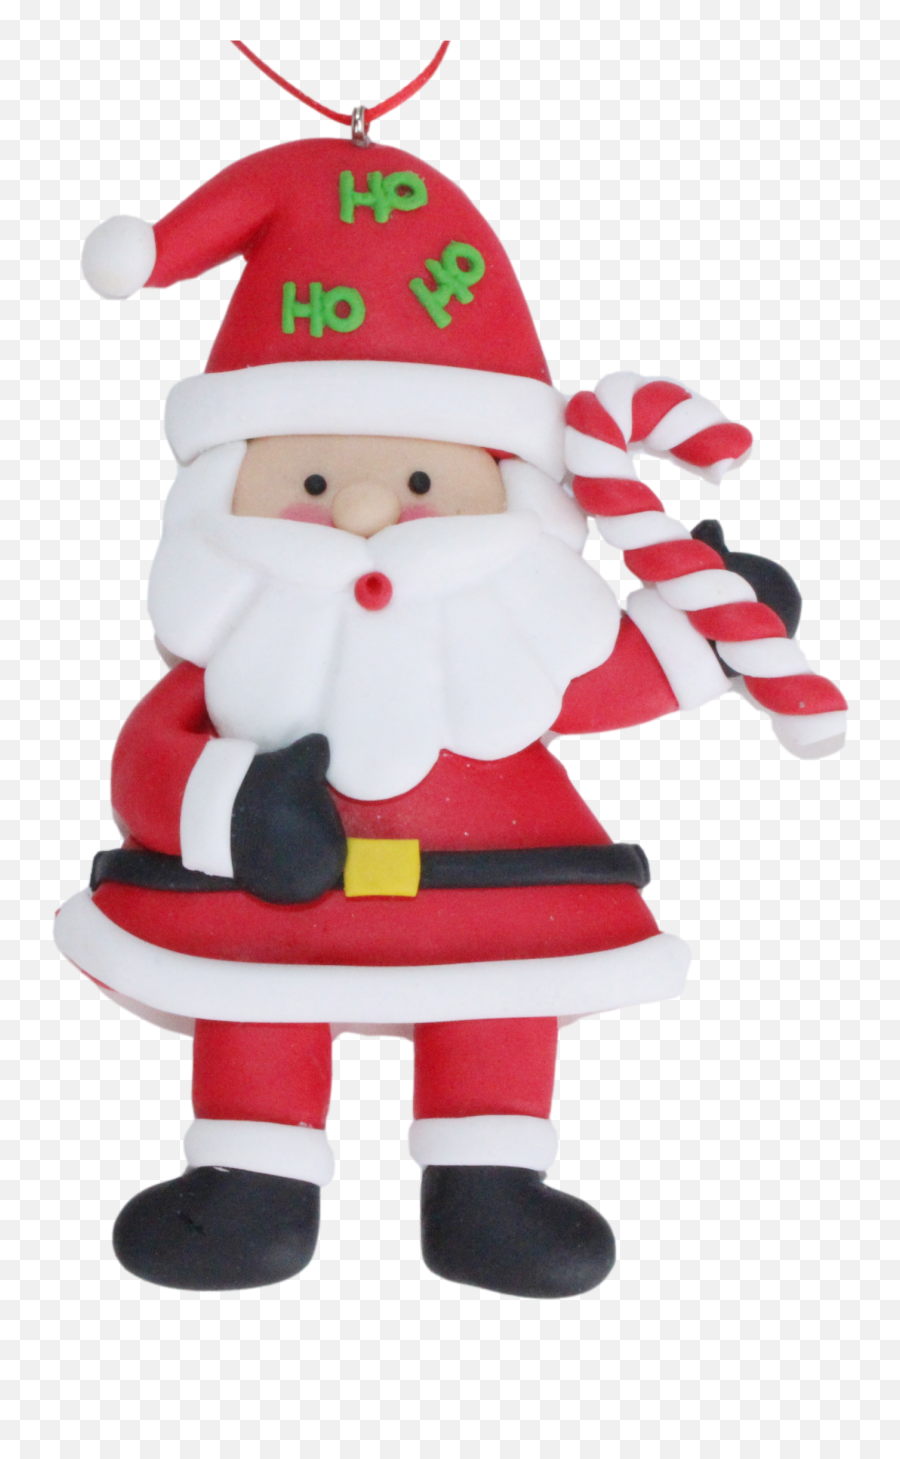 Santa With Candy Cane - Christmas Heirloom Company Emoji,Candy Shop Clipart